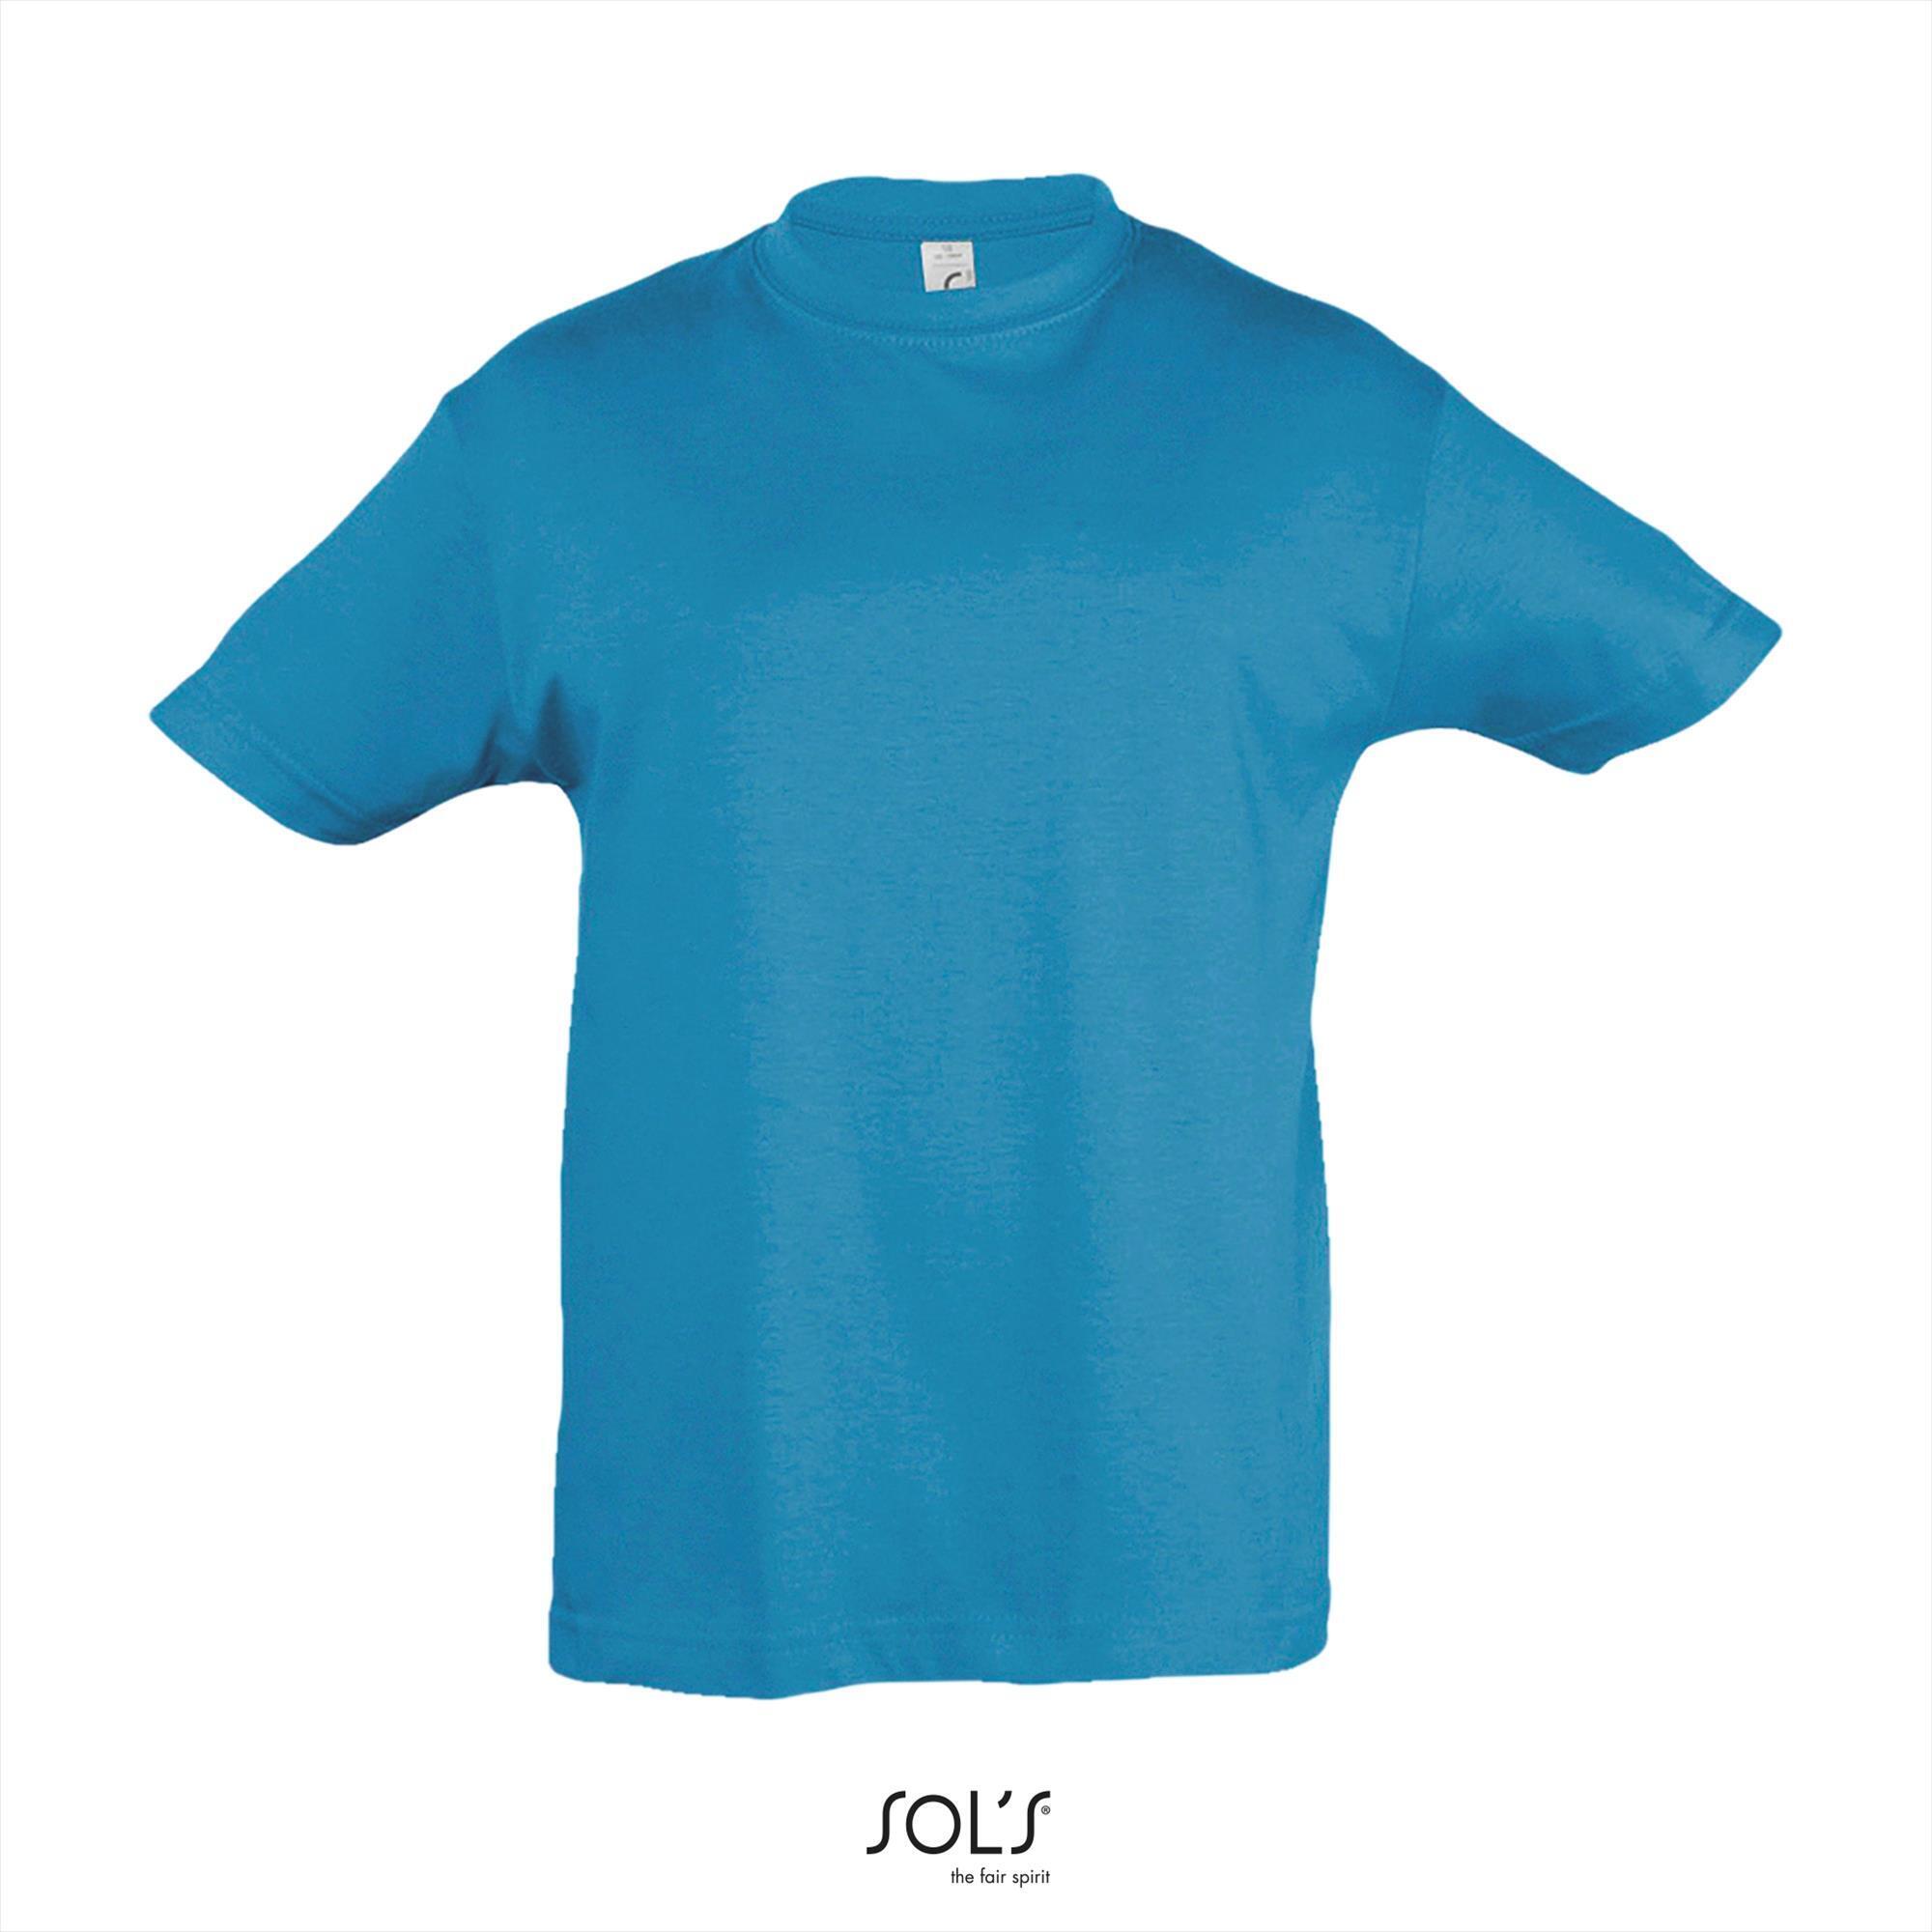 Klassiek kinder T-shirt aqua blauw